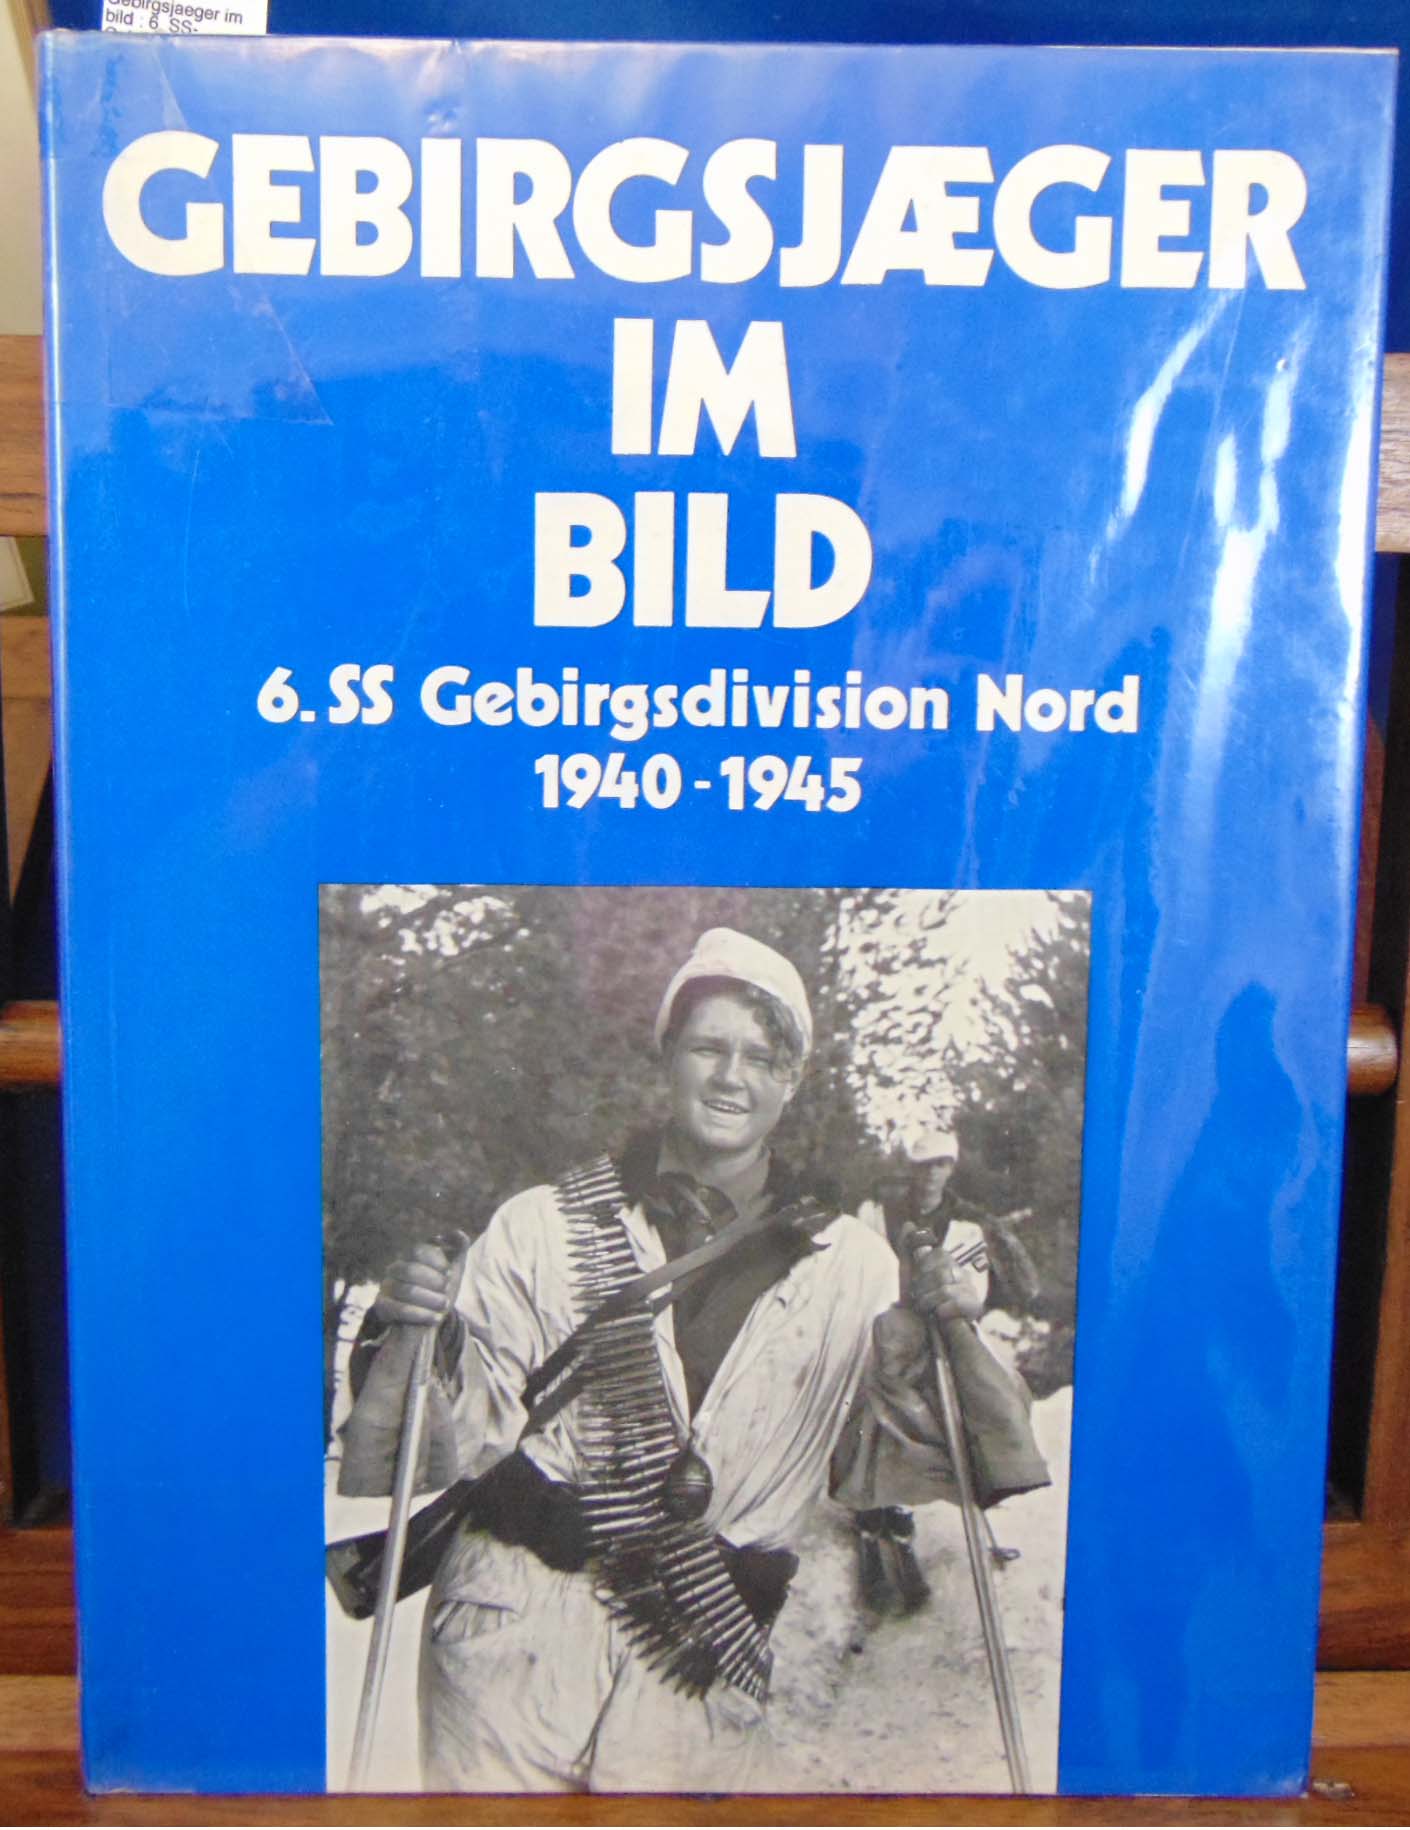 Gebirgsjaeger im bild : 6. SS-Gebirgsdivision Nord 1940-1945 (German Edition) - Steurich